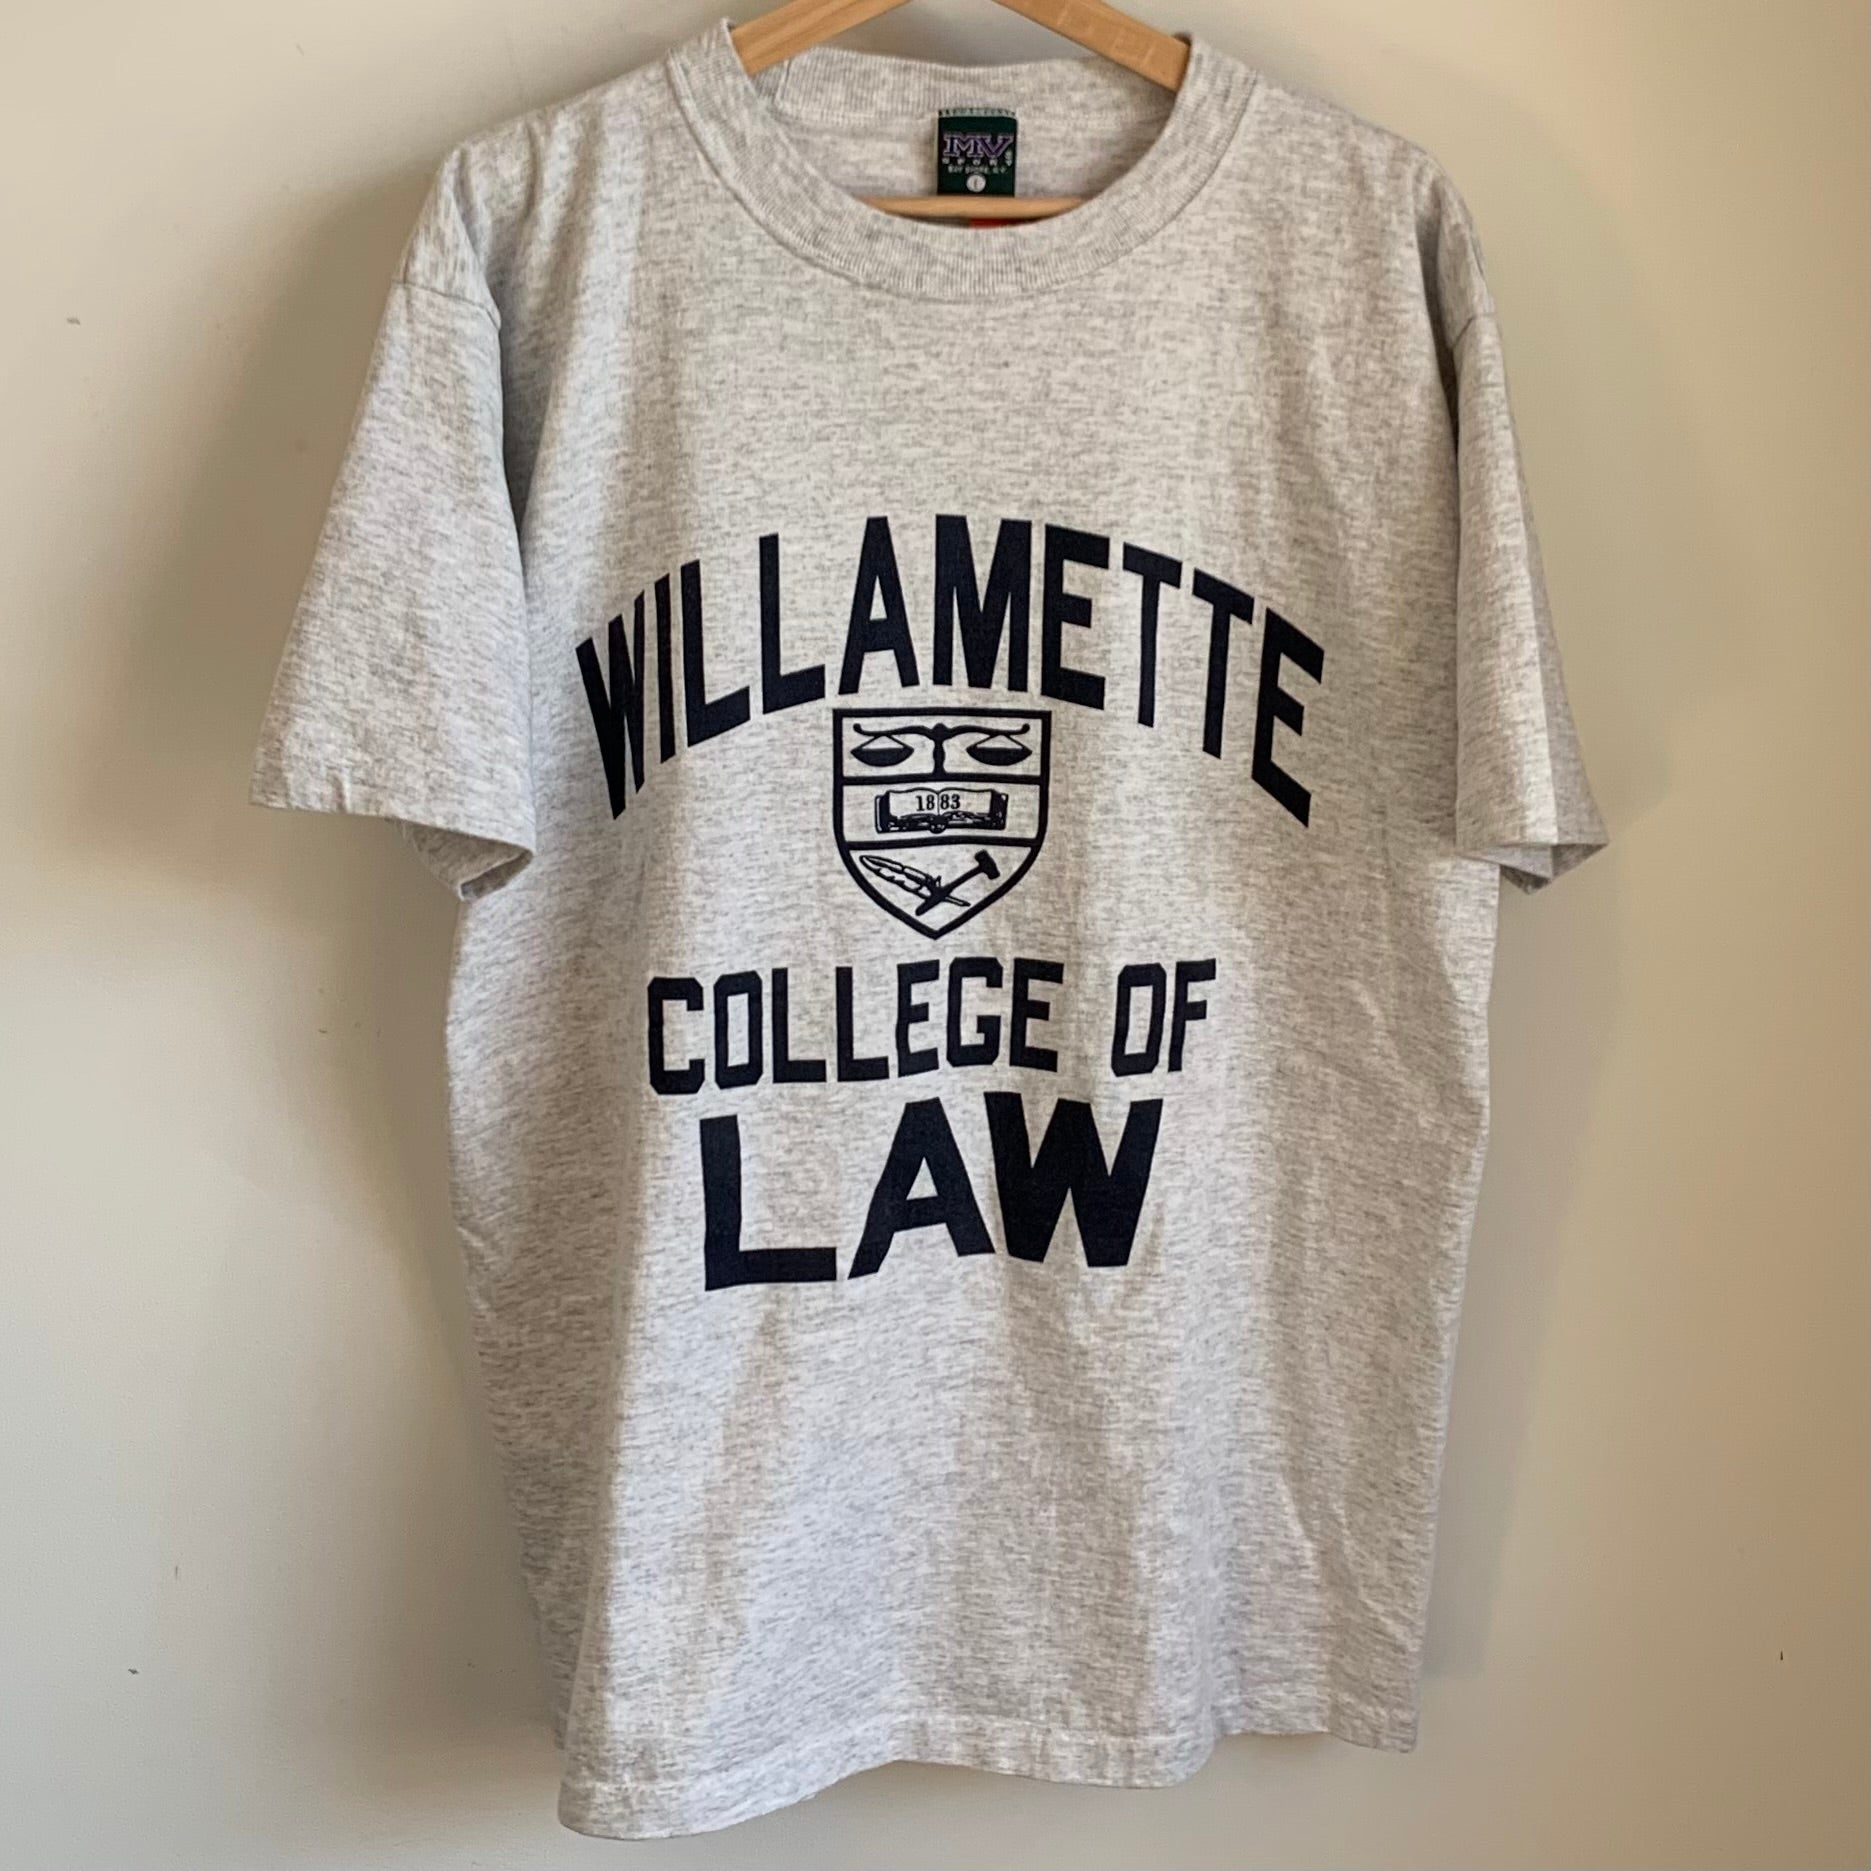 Vintage Willamette College Of Law Shirt L